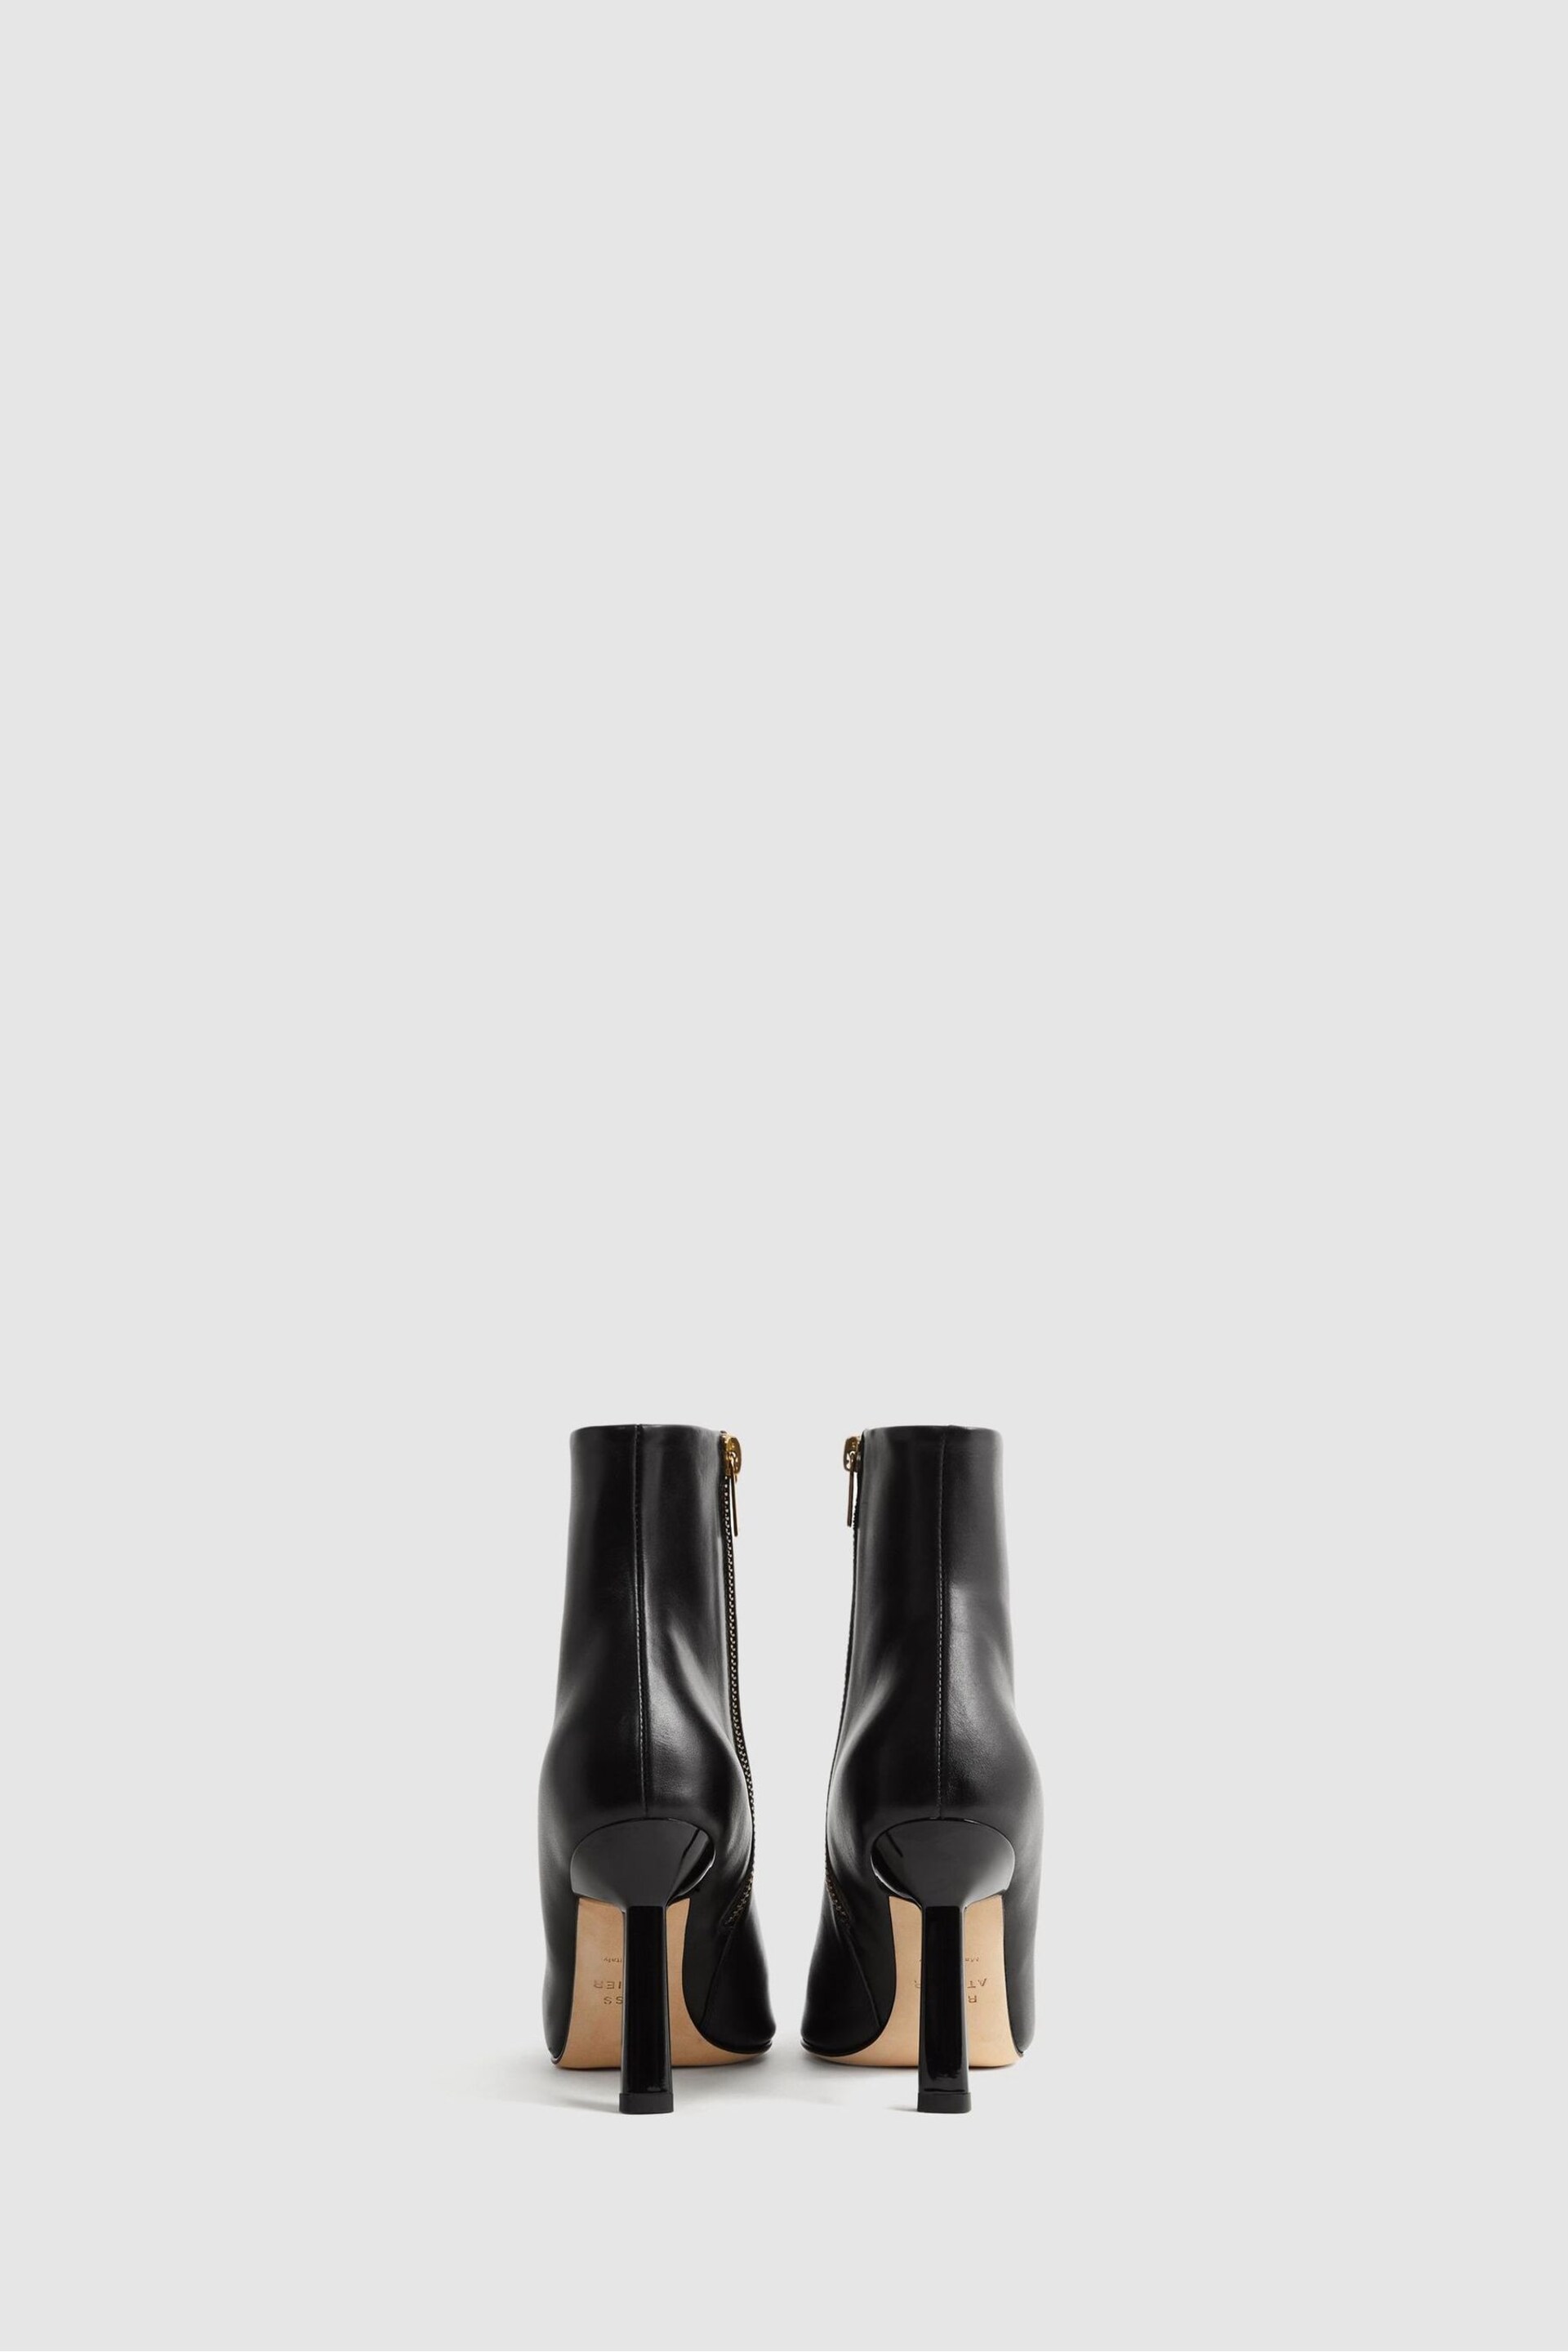 Reiss Black Scarlett Atelier Italian Leather Heeled Ankle Boots - Image 3 of 6